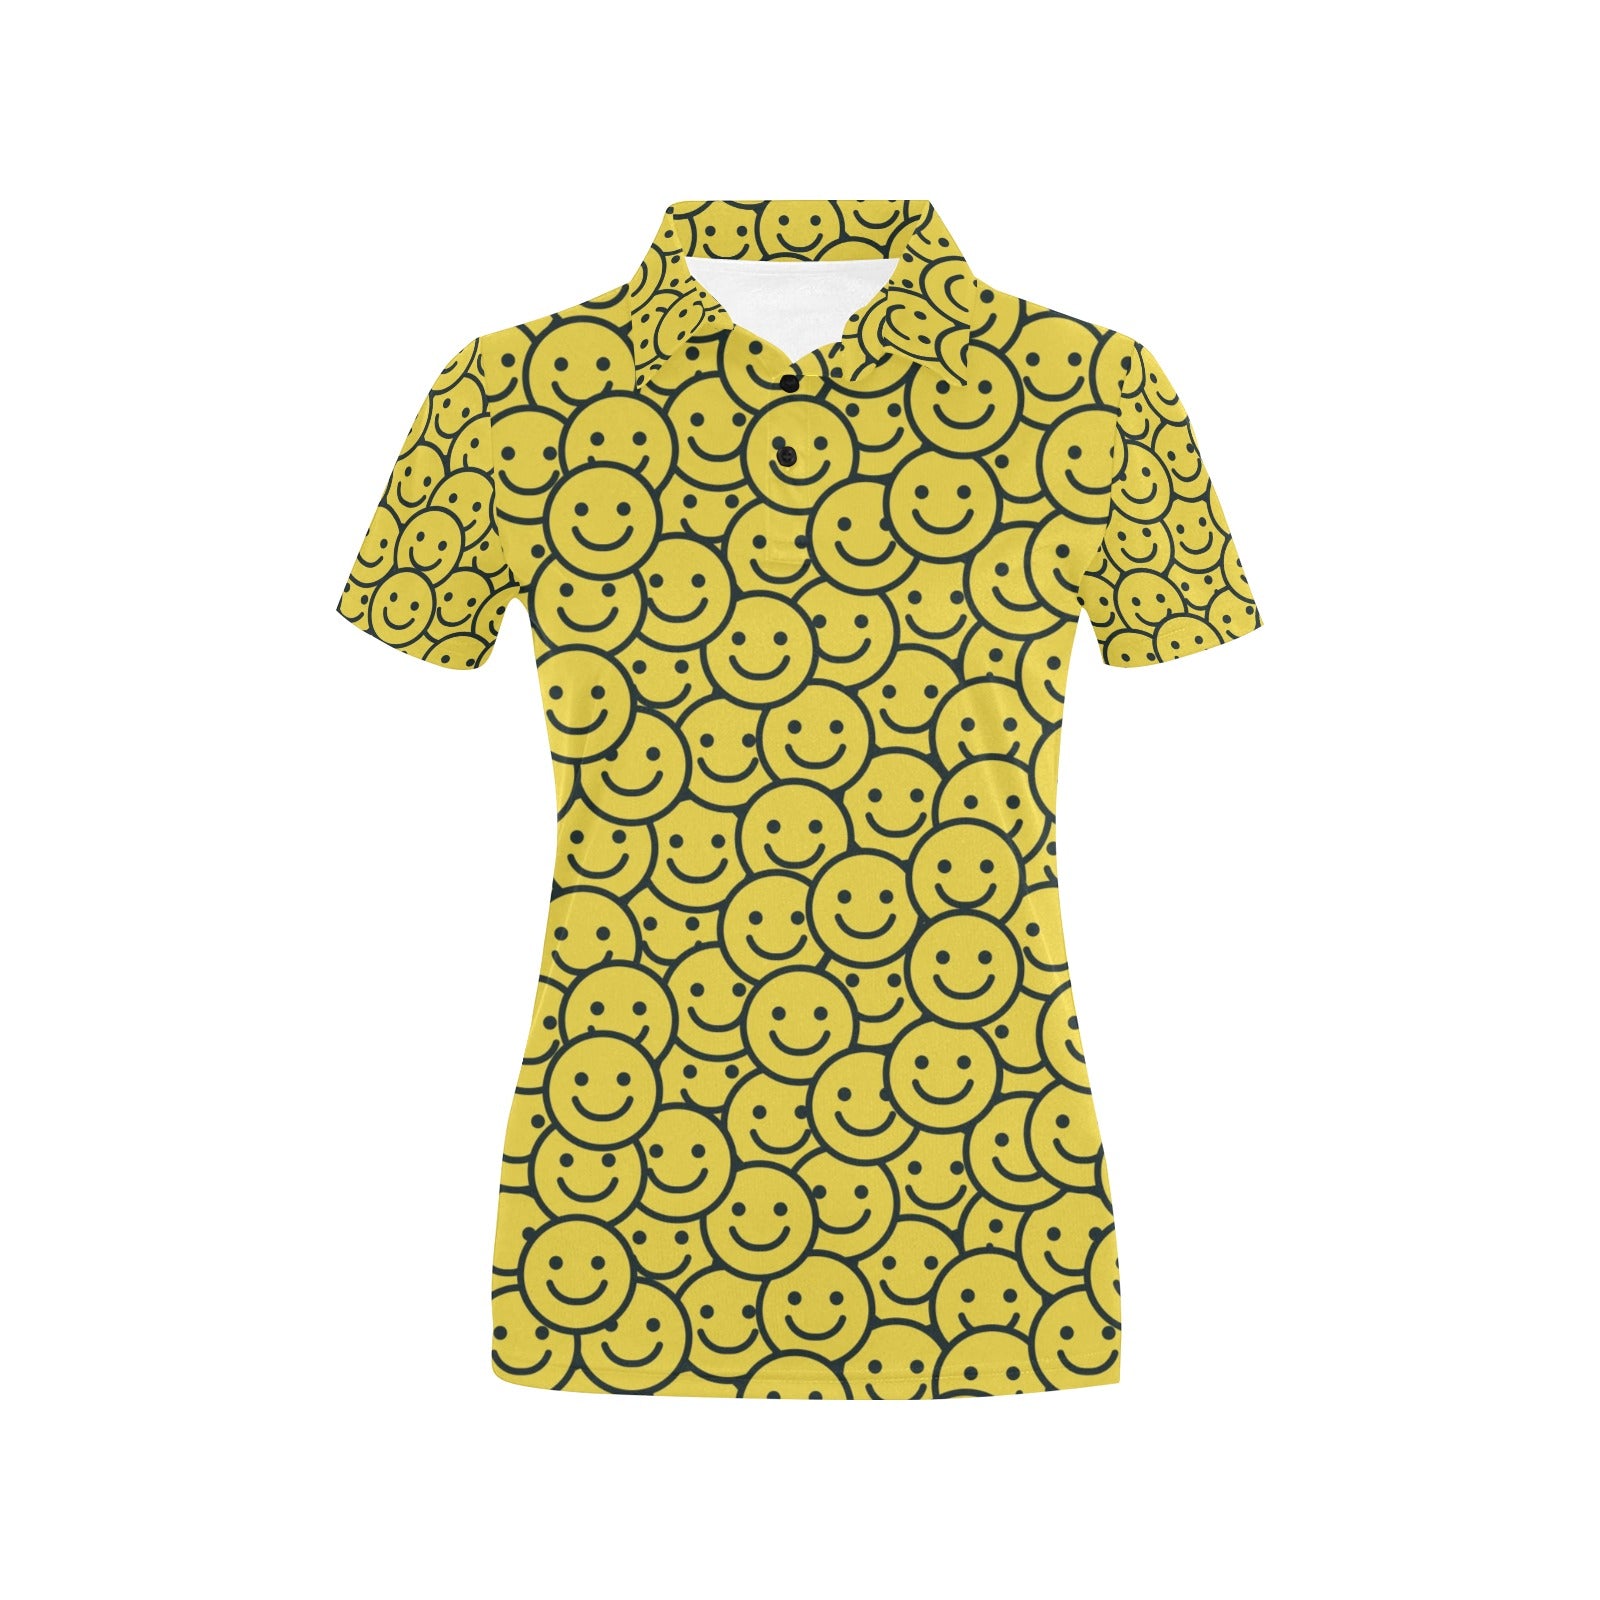 Smiley Face Emoji Print Design LKS302 Women's Polo Shirt